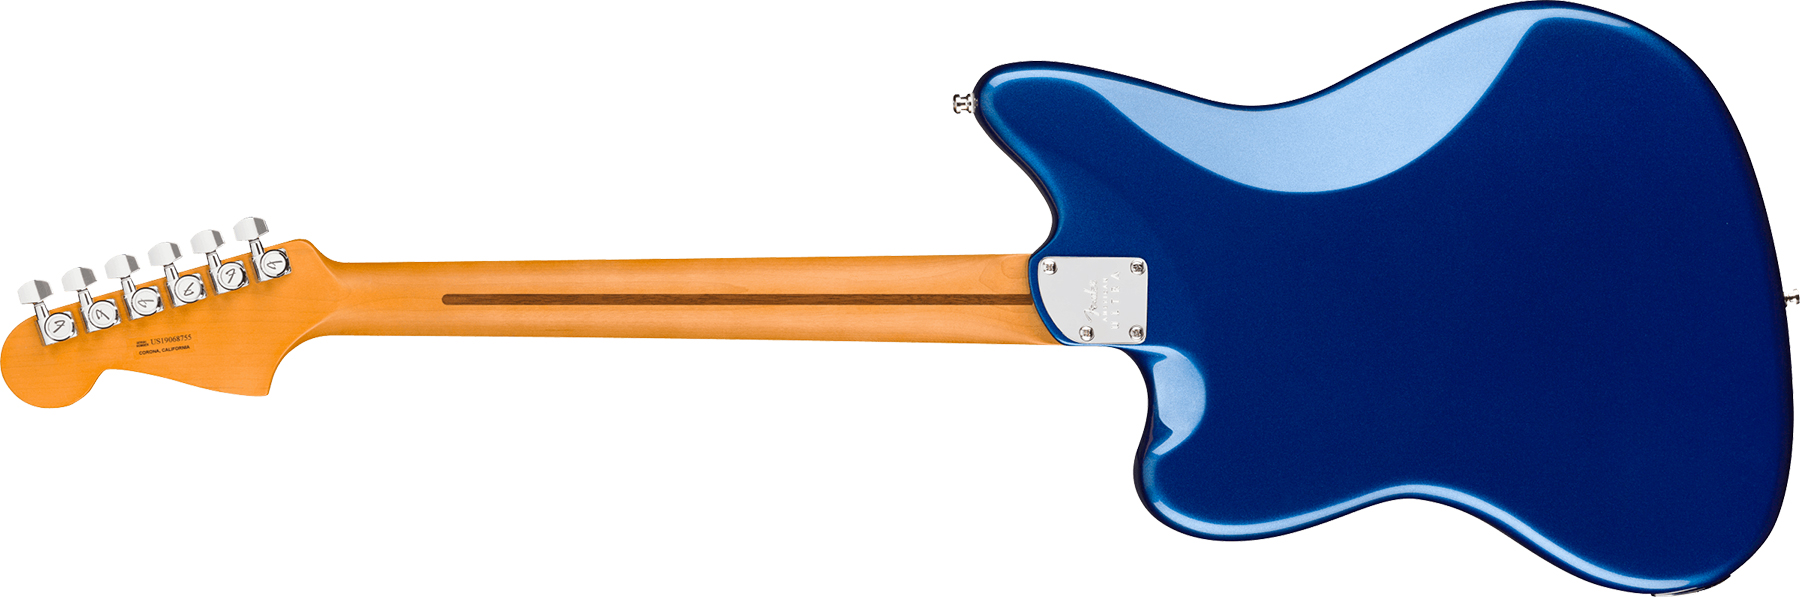 Fender Jazzmaster American Ultra 2019 Usa Mn - Cobra Blue - Retro rock electric guitar - Variation 1